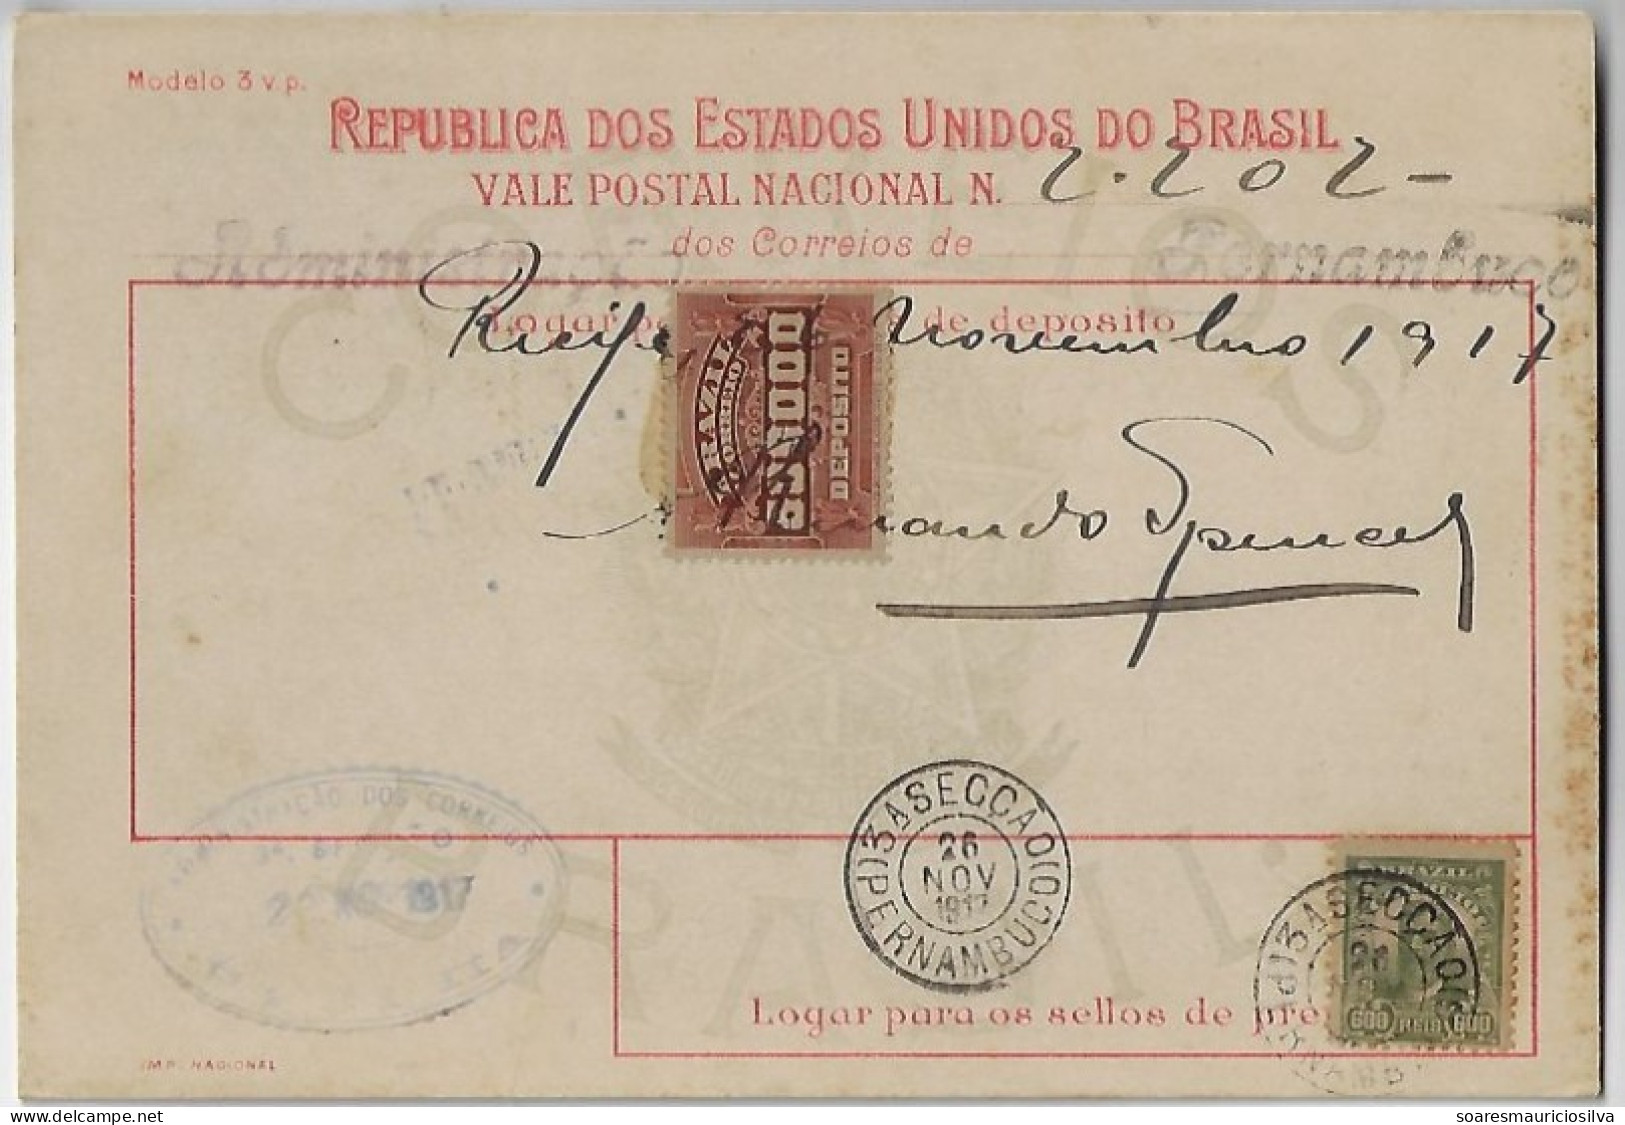 Brazil 1917 Money Order From Recife To Bahia Vale Postal Stamp 50,000 Reis + Definitive President Prudente De Morais - Covers & Documents